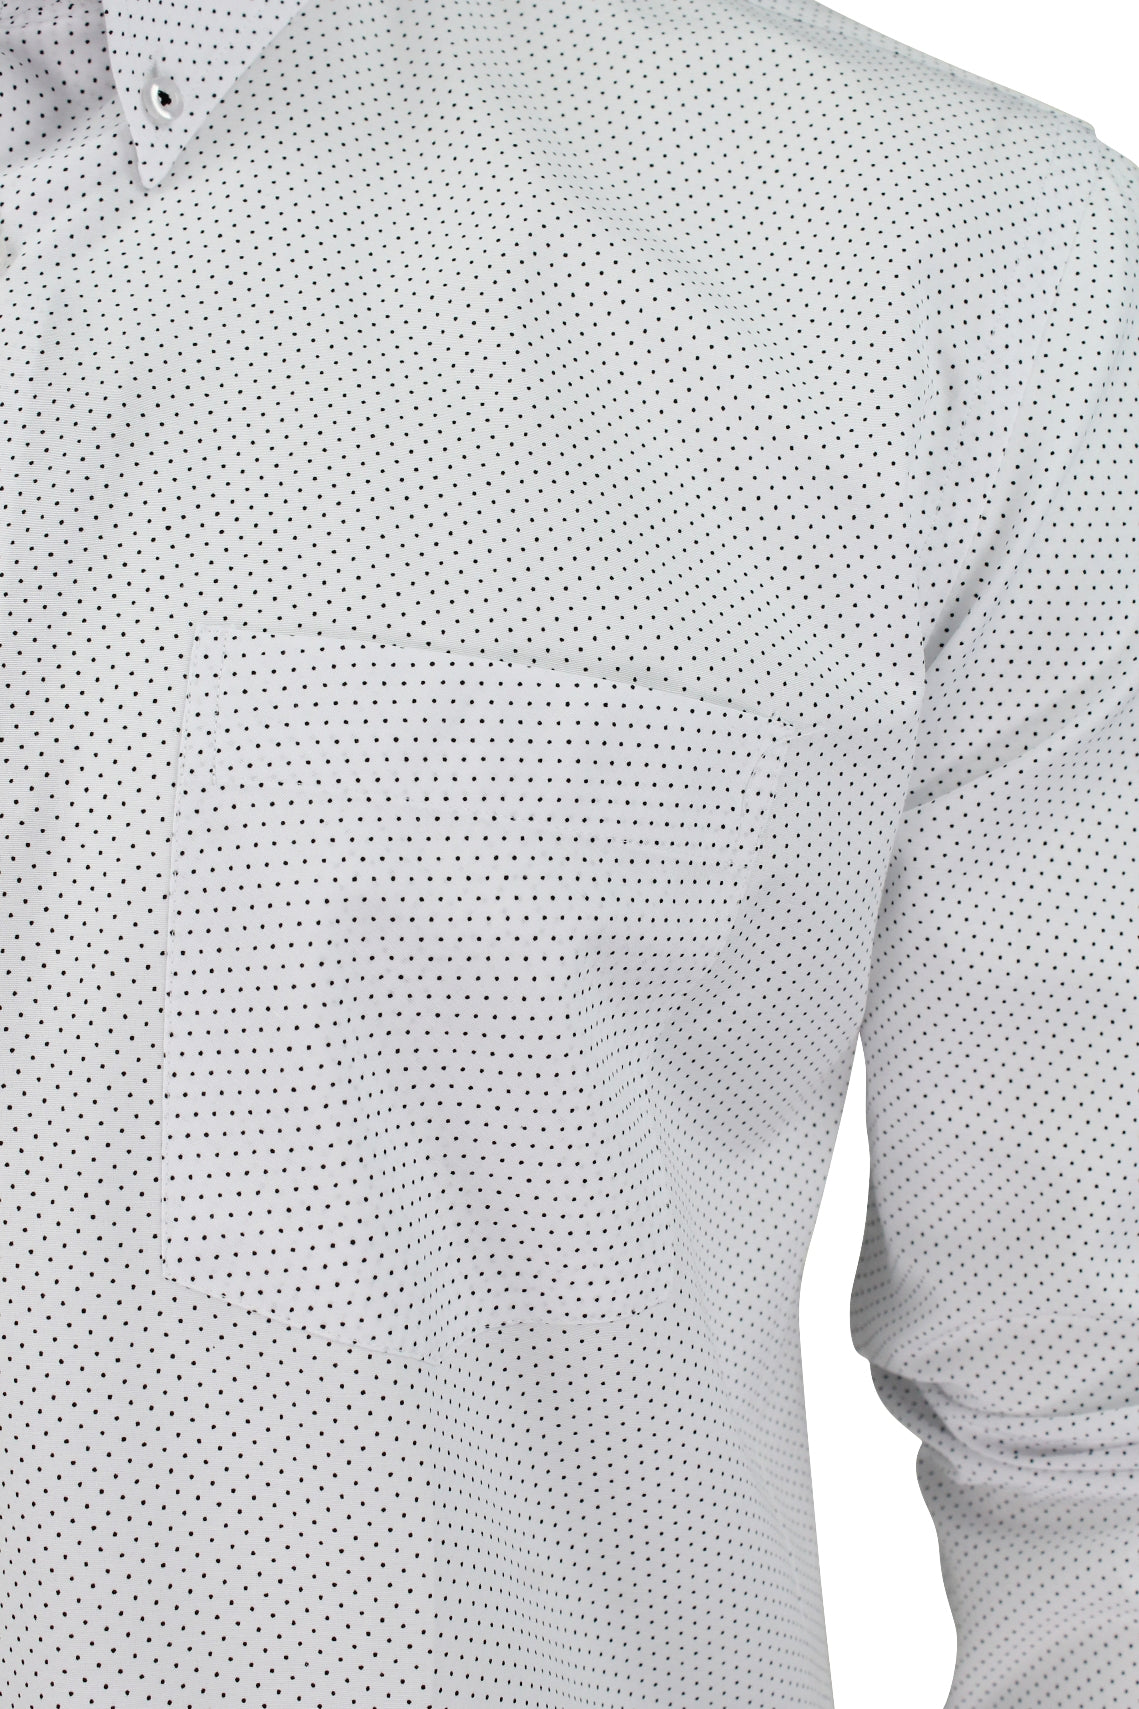 Mens Long Sleeved Shirt by Xact Clothing Mini Polka Dot, 02, 1510121, White